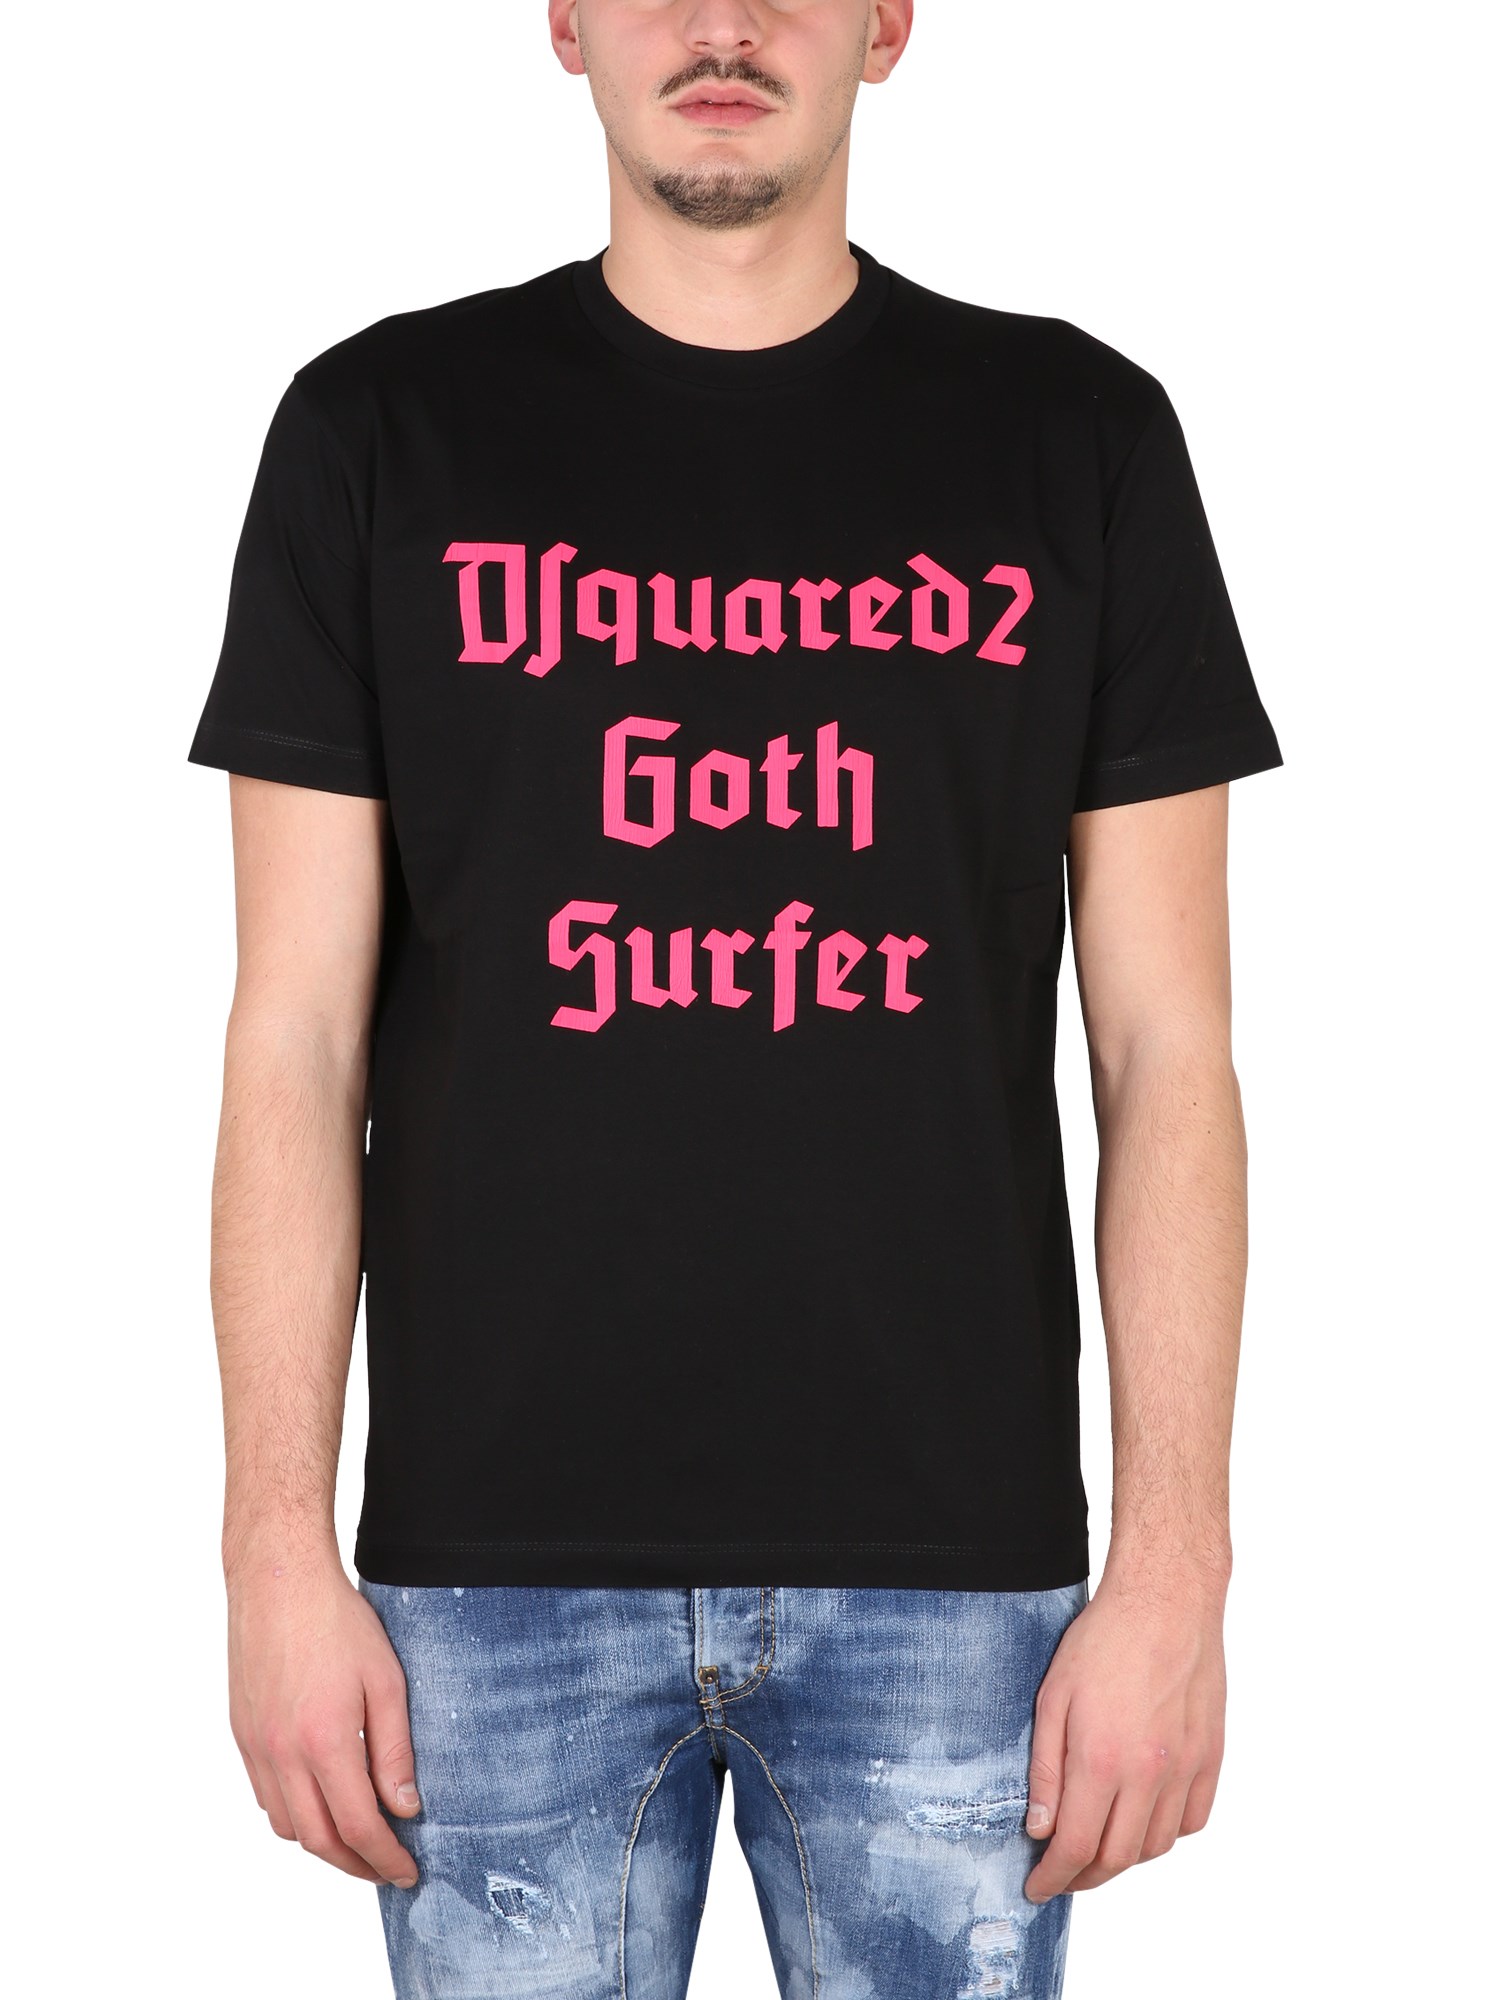 dsquared goth surfer t-shirt